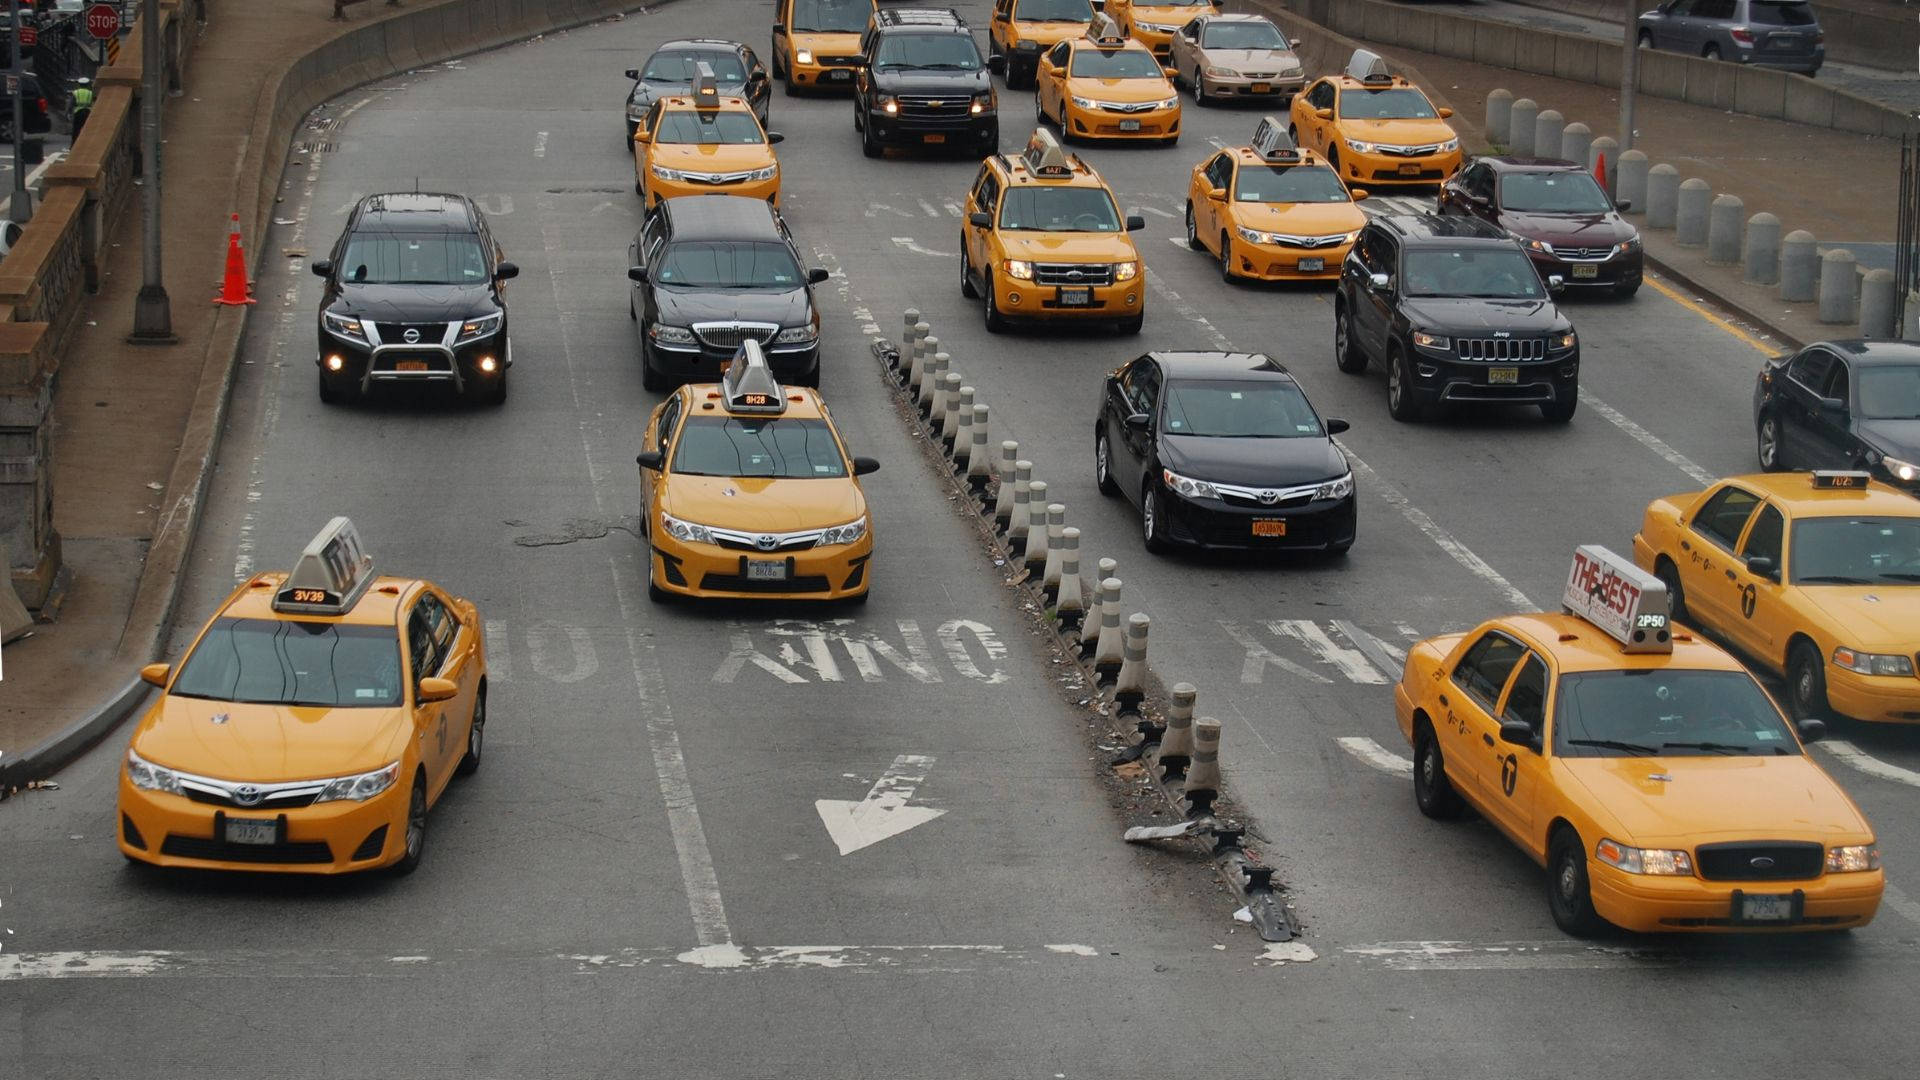 Vistaaérea De Tráfico De Taxis En Autopista. Fondo de pantalla